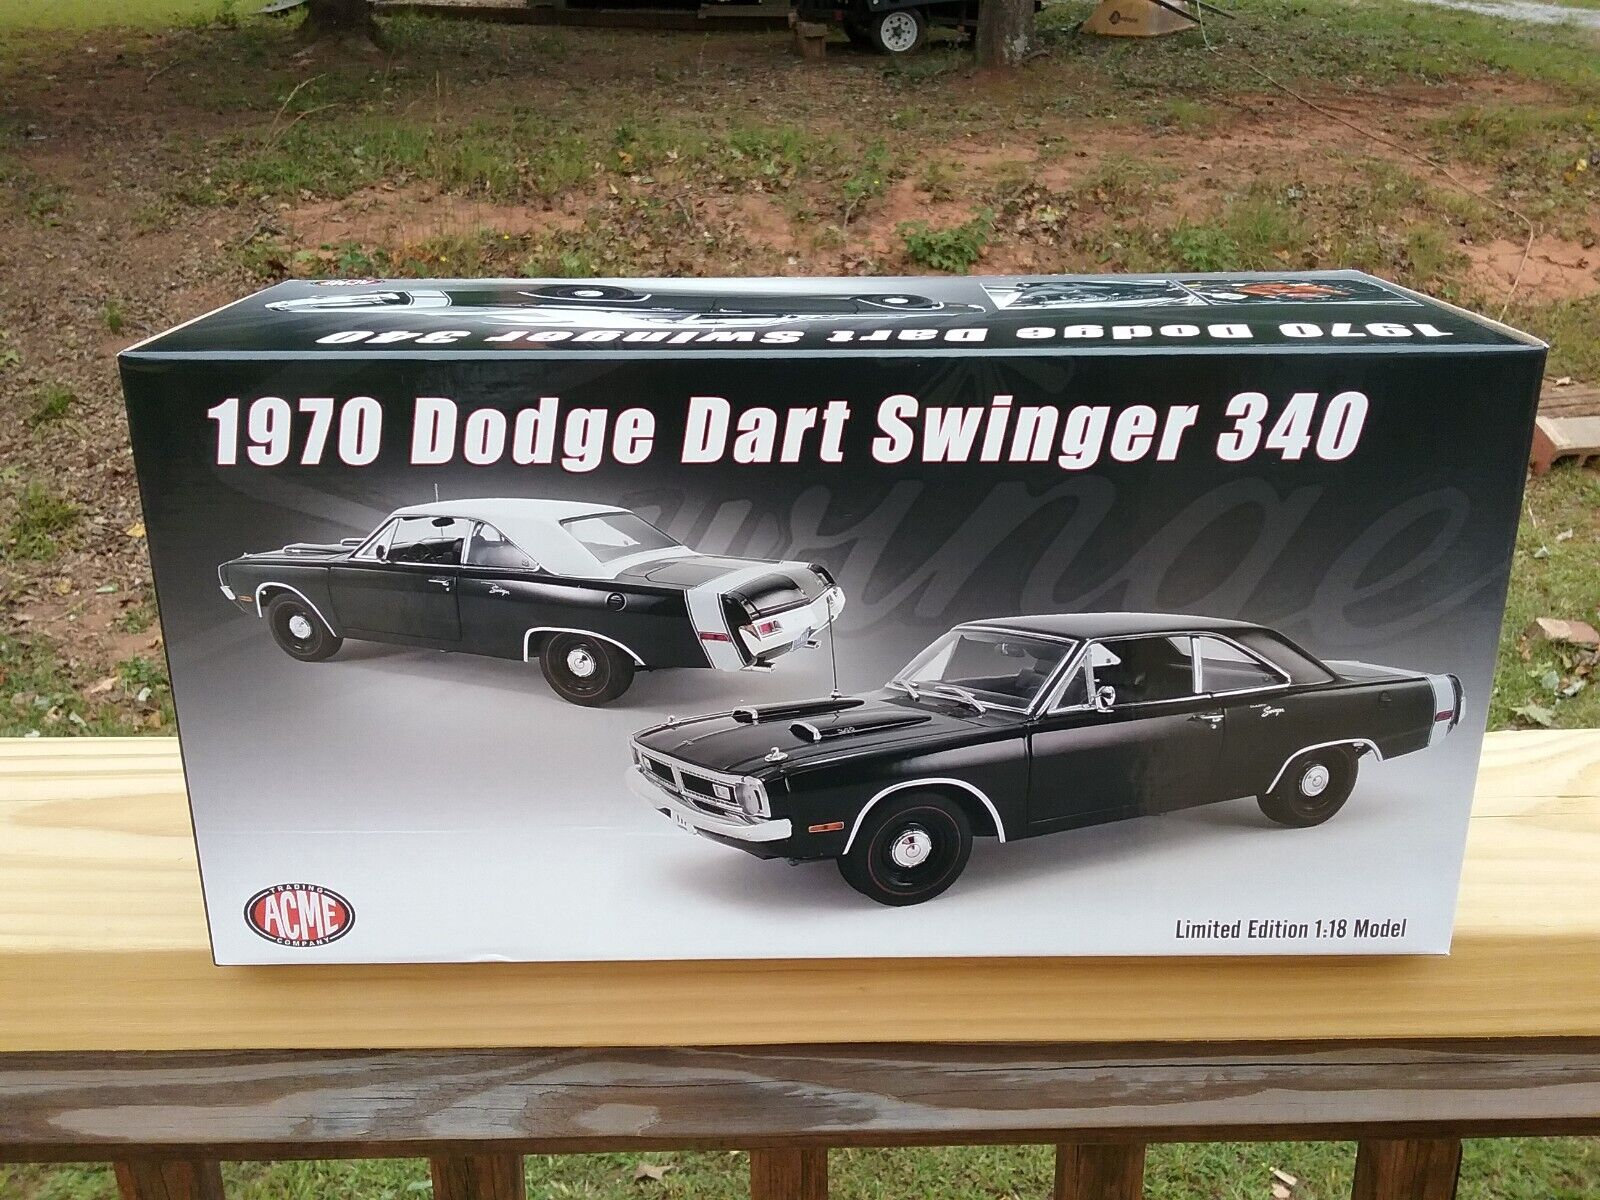 engine for dodge dart swinger Adult Pics Hq